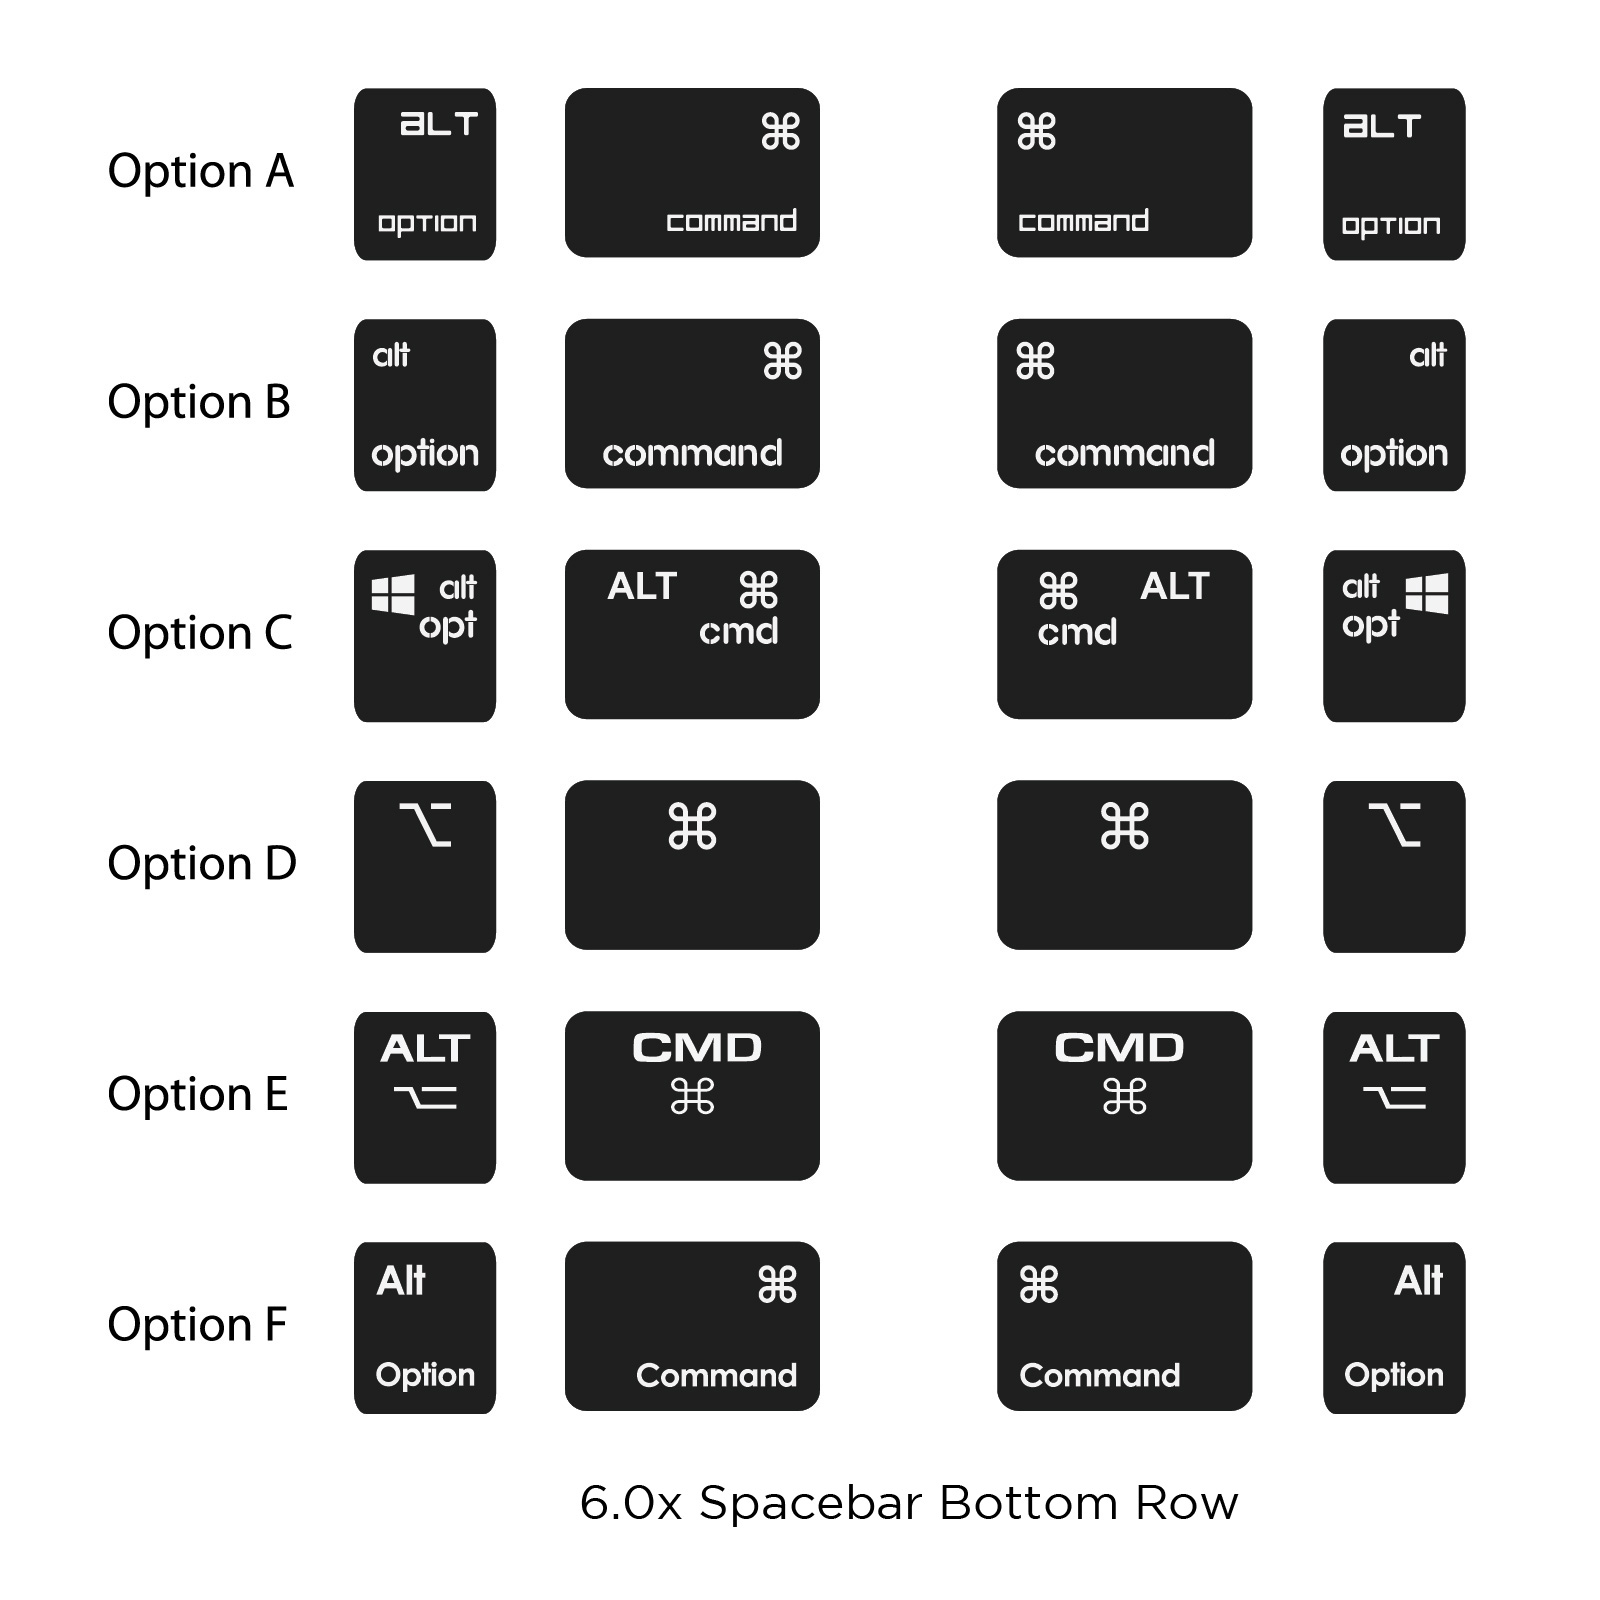 customizing keyboard for mac media keys